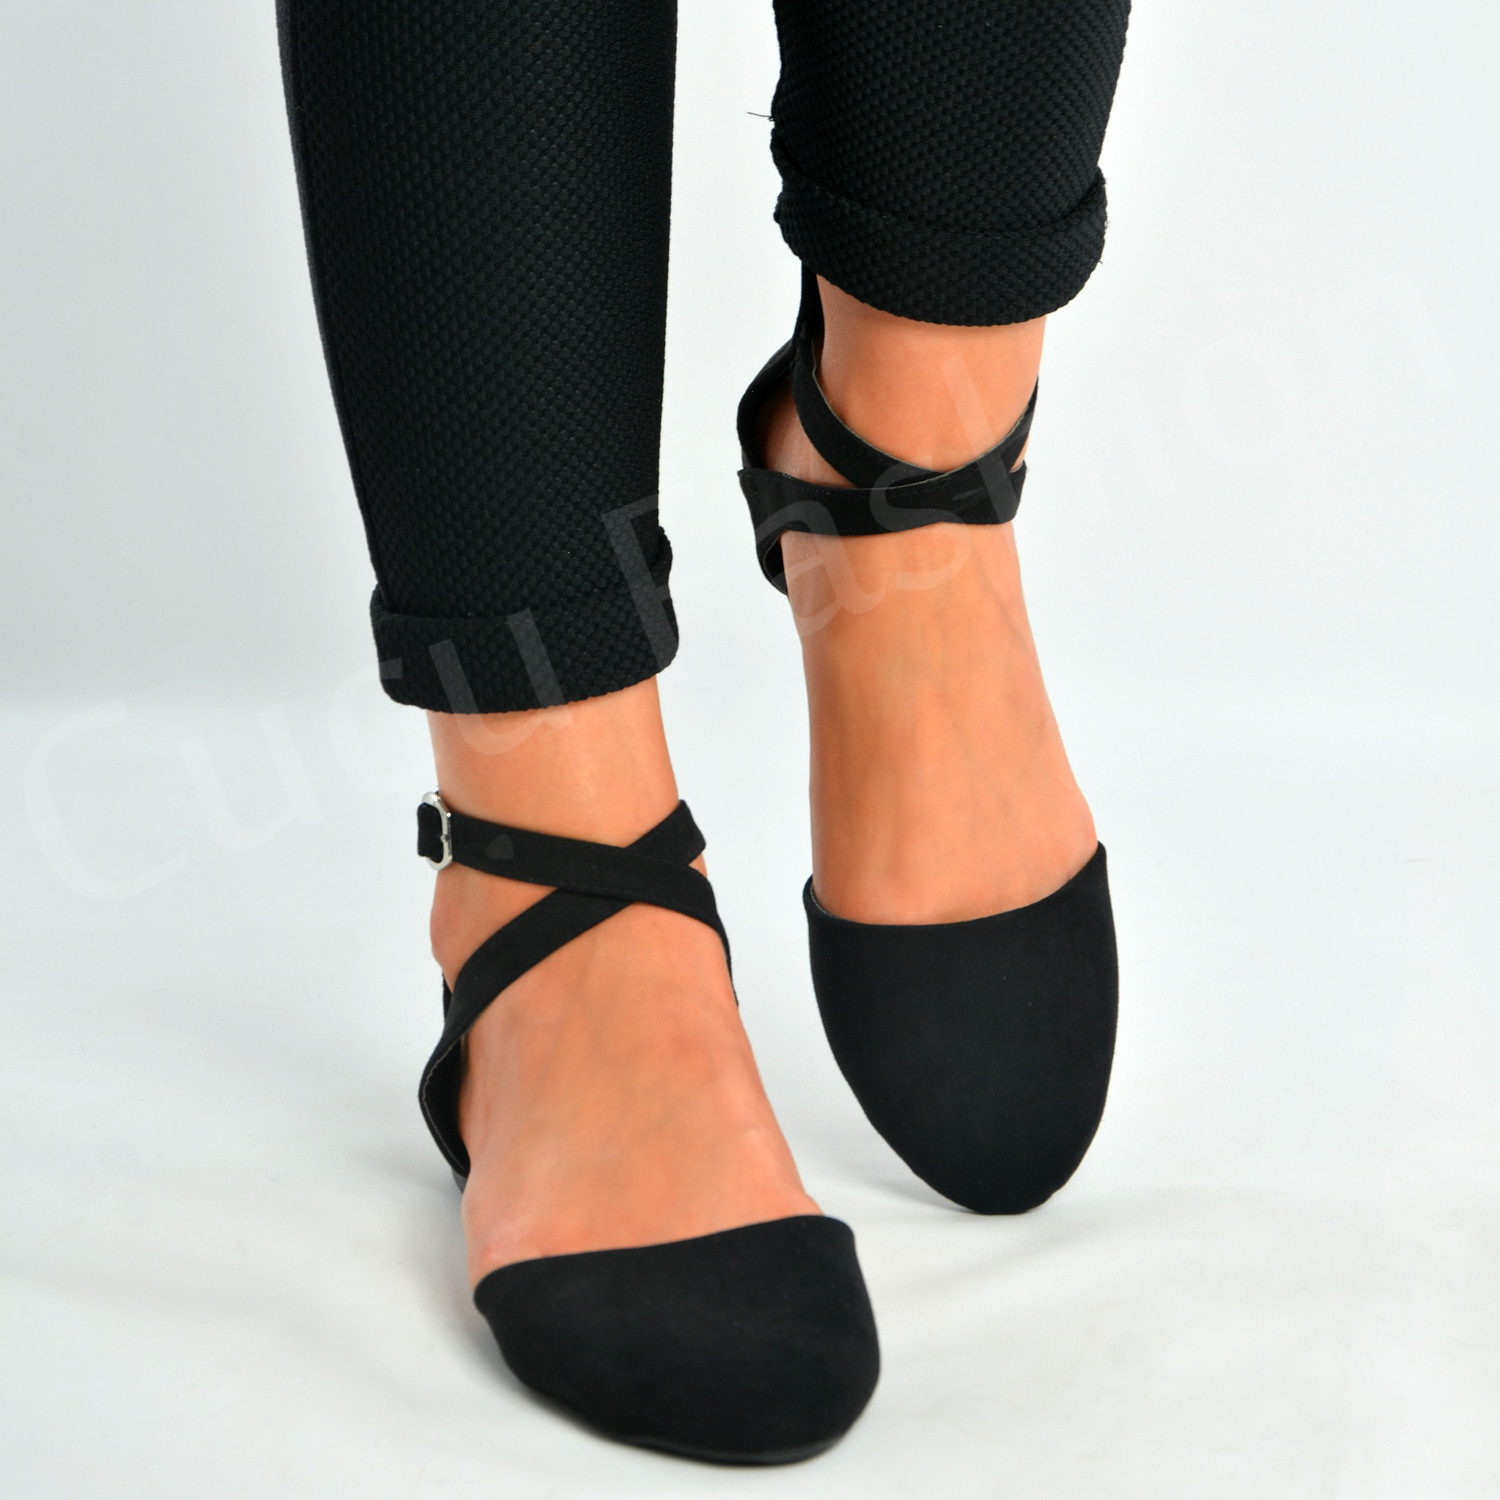 Anklet With Shoes
 La s Ankle Strap Ballerina Womens Flats Court Pumps